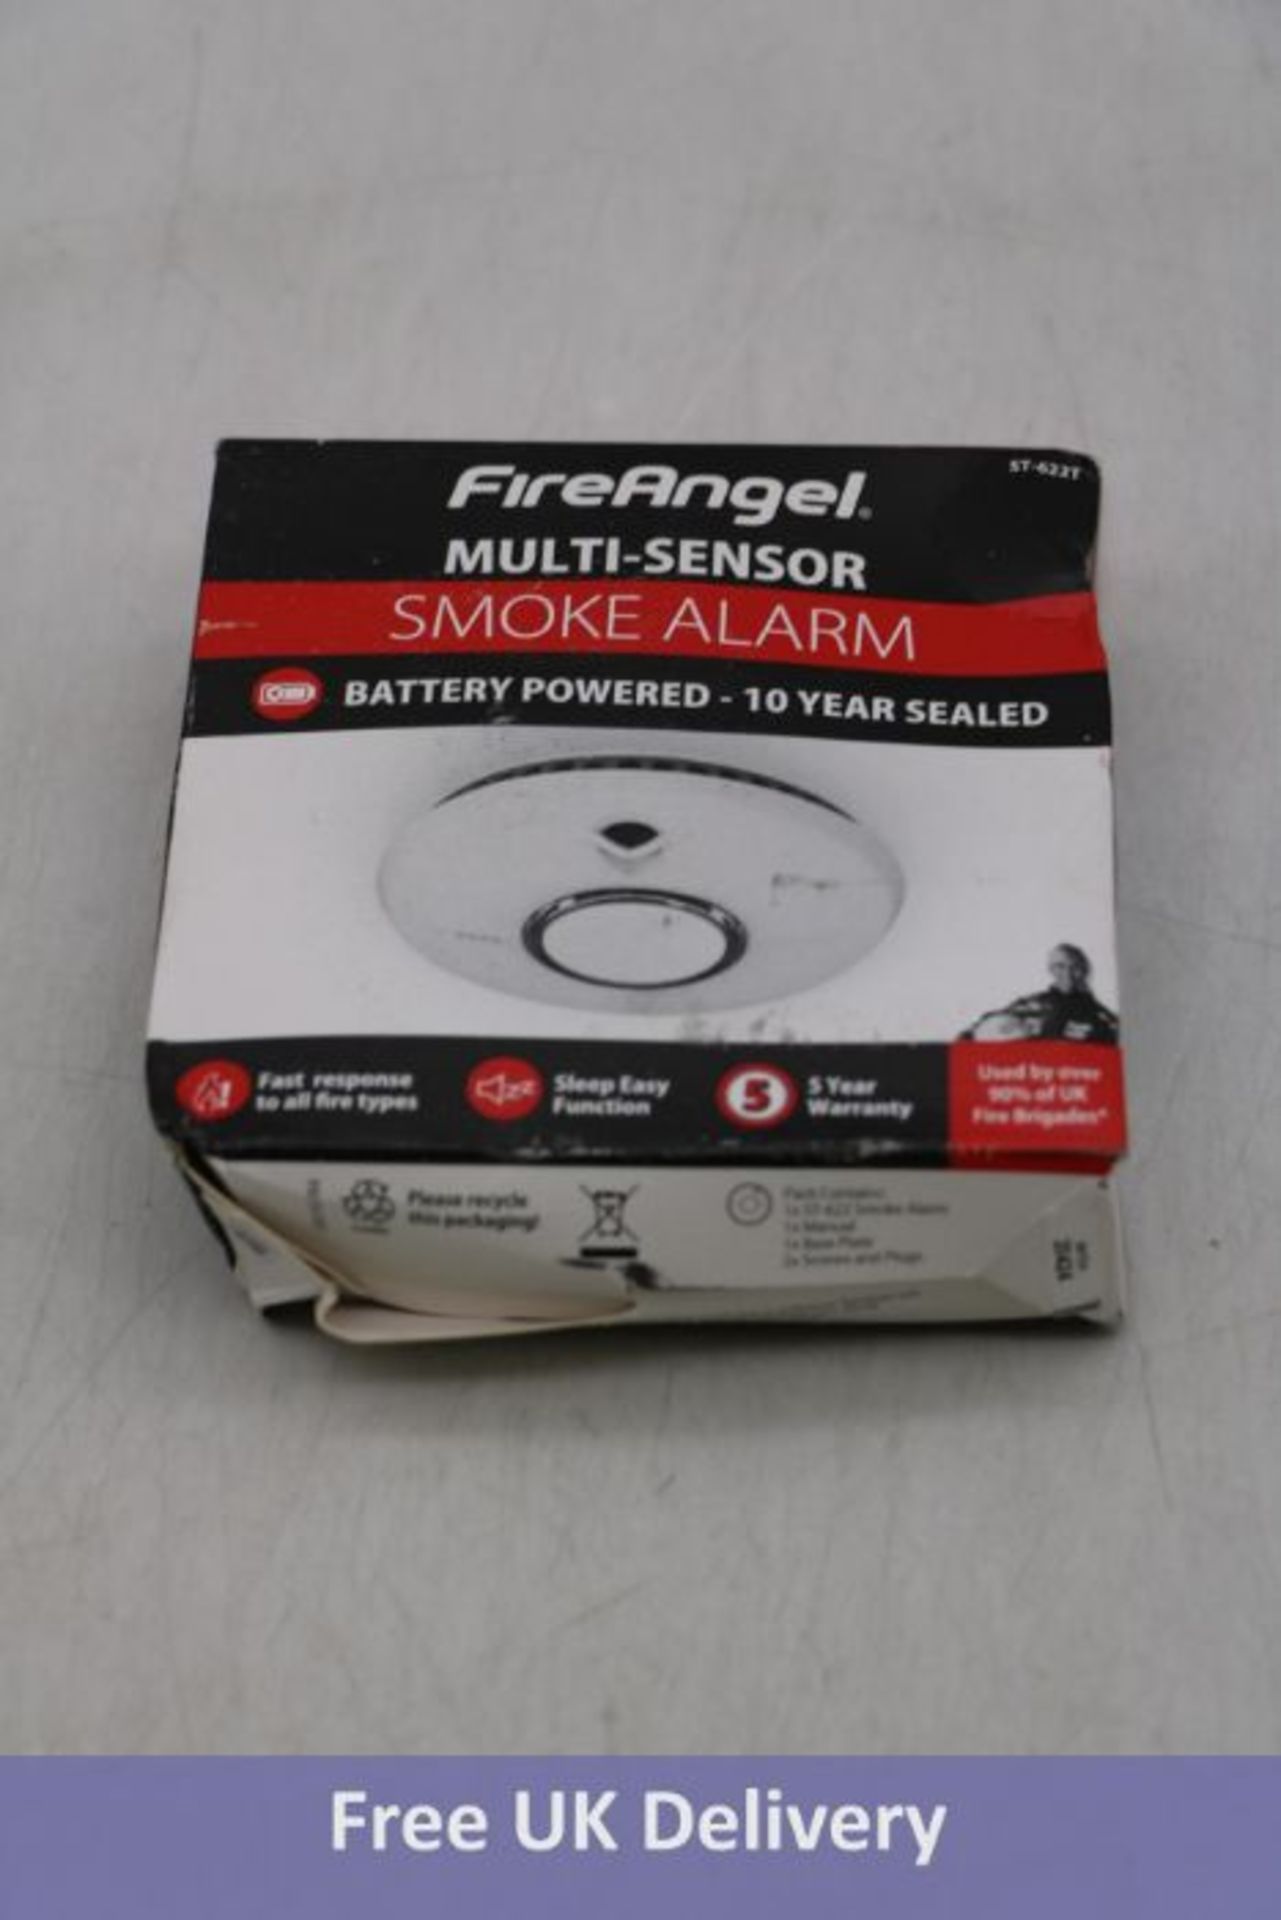 Six Fire Angel Multi Sensor Smoke Alarms